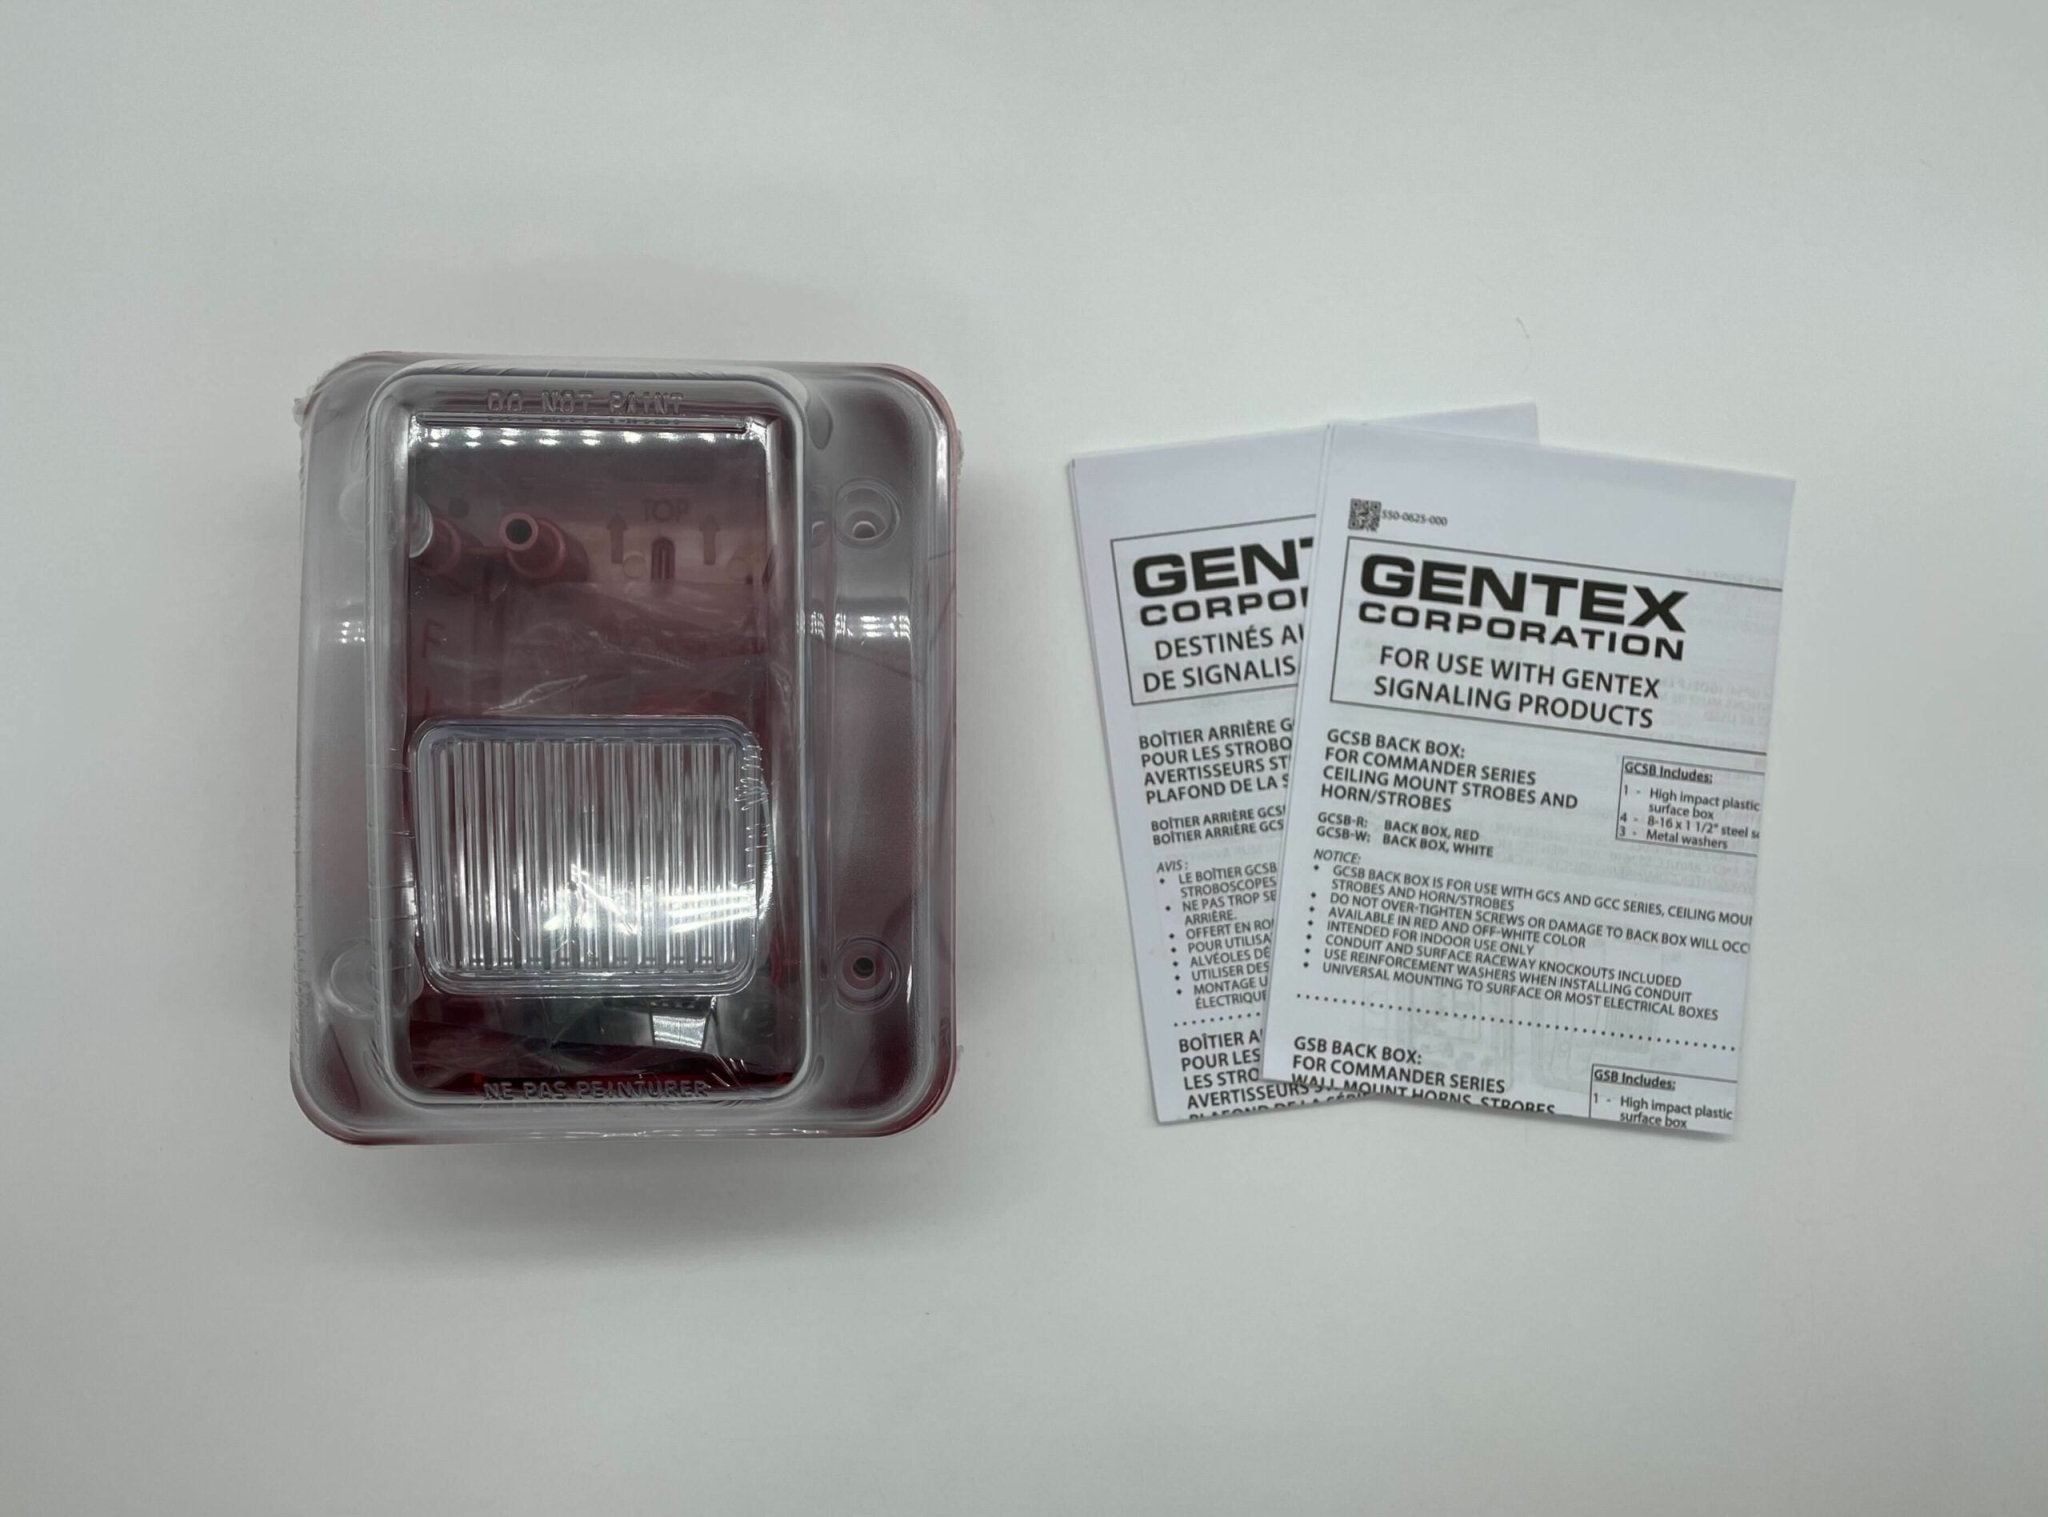 Gentex GOE-R - The Fire Alarm Supplier